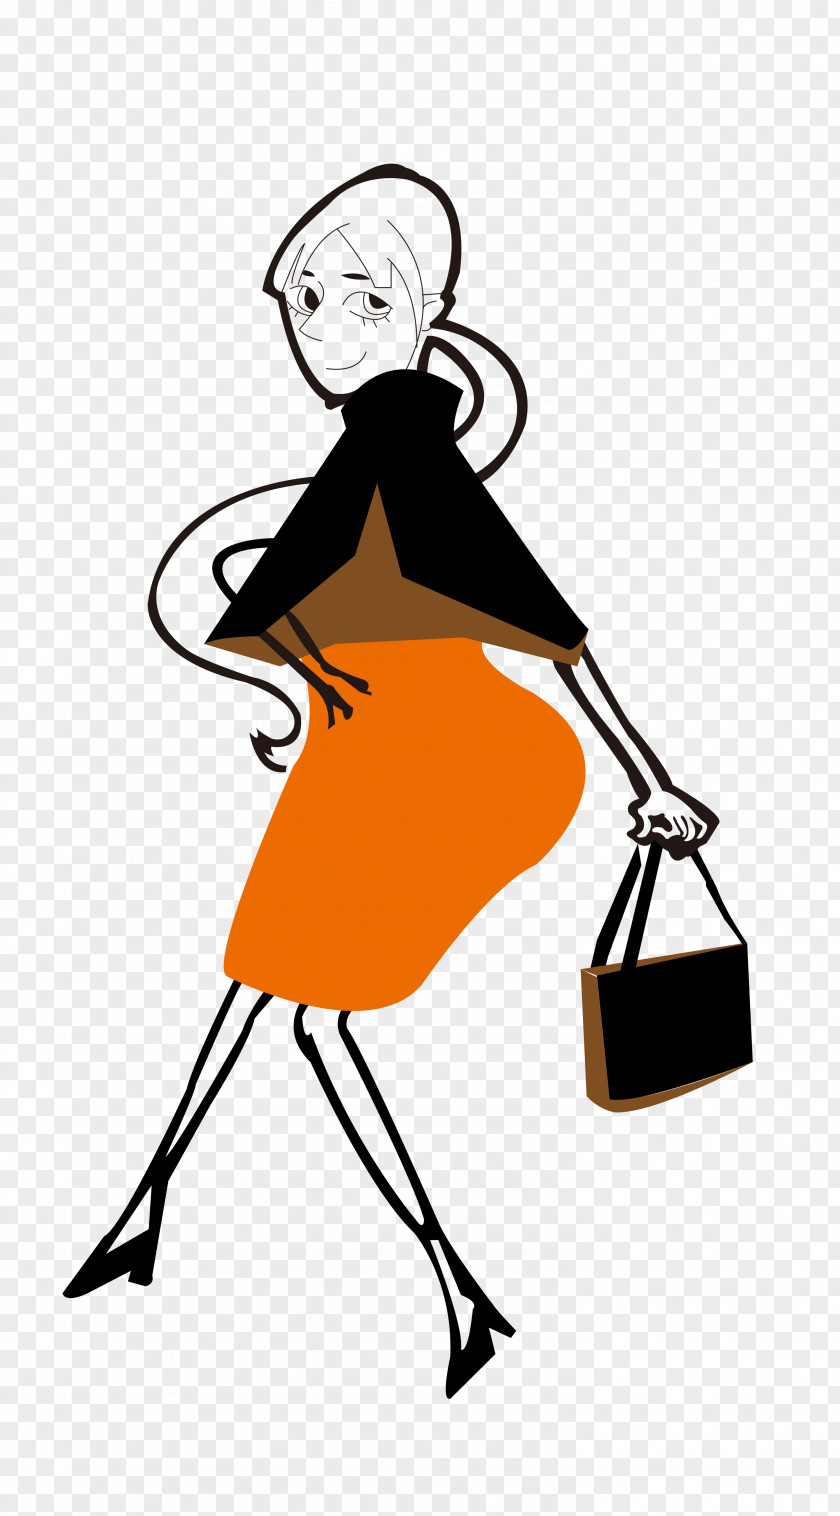 Cartoon Image Of A Woman Shopping Clip Art PNG